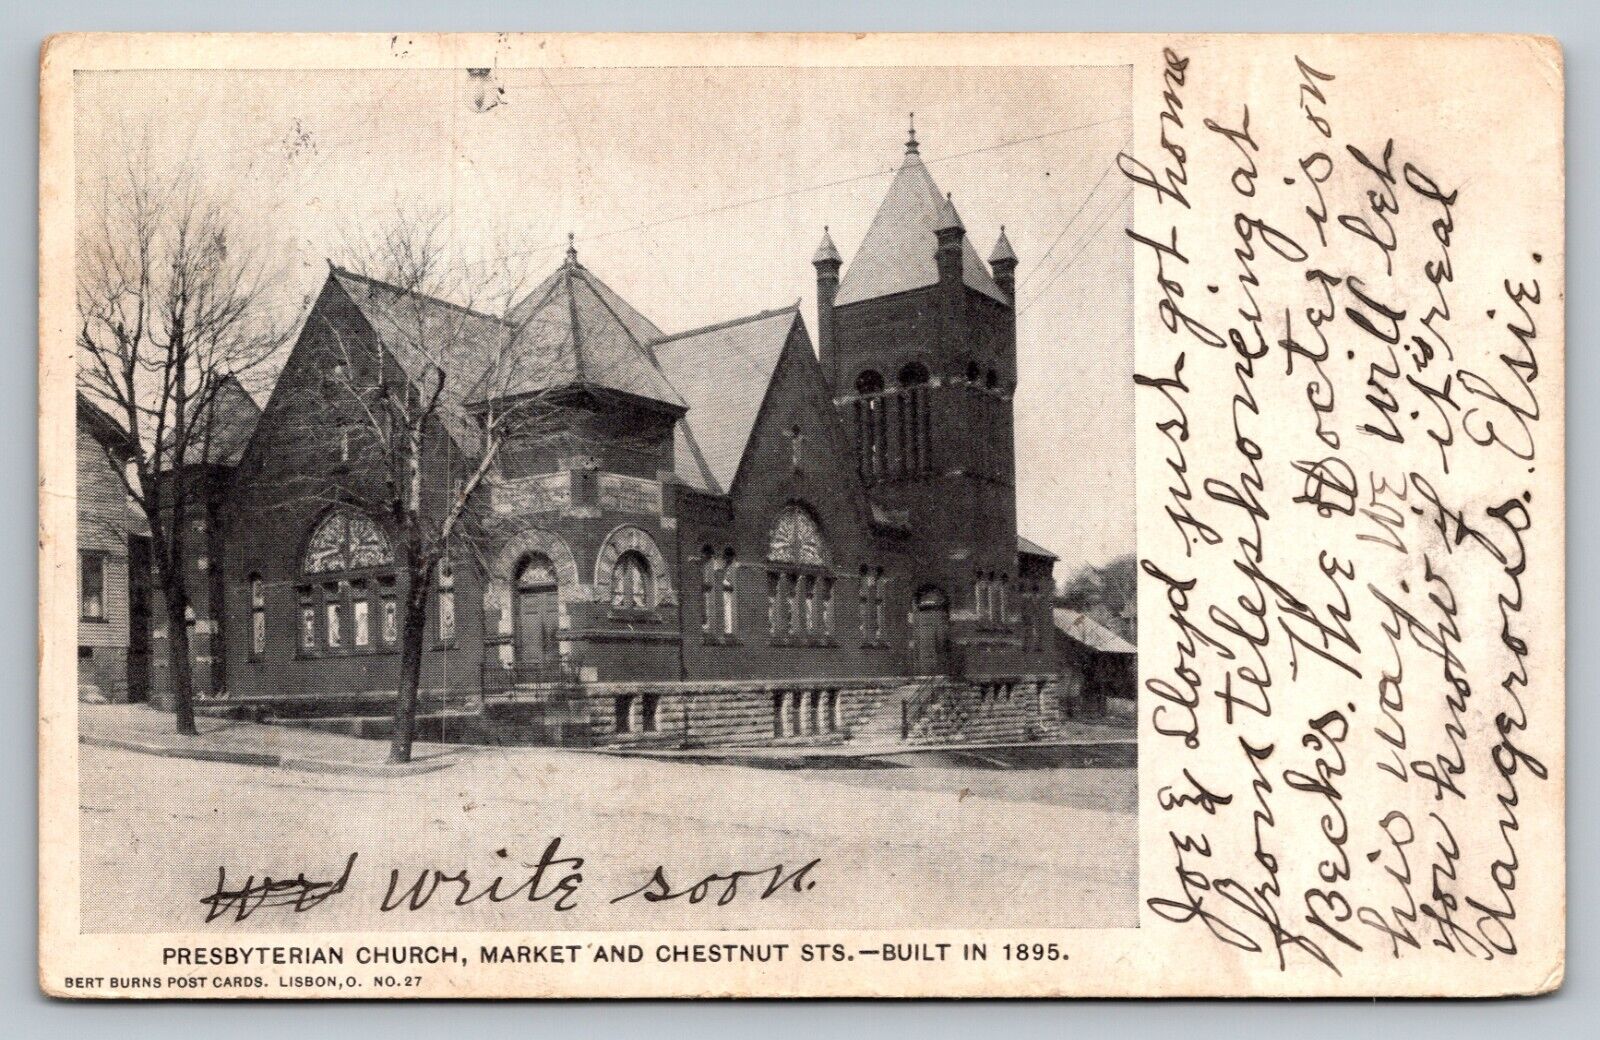 RARE VTG 1910 Postcard Presbyterian Church Market & Chestnut St Built in 1895